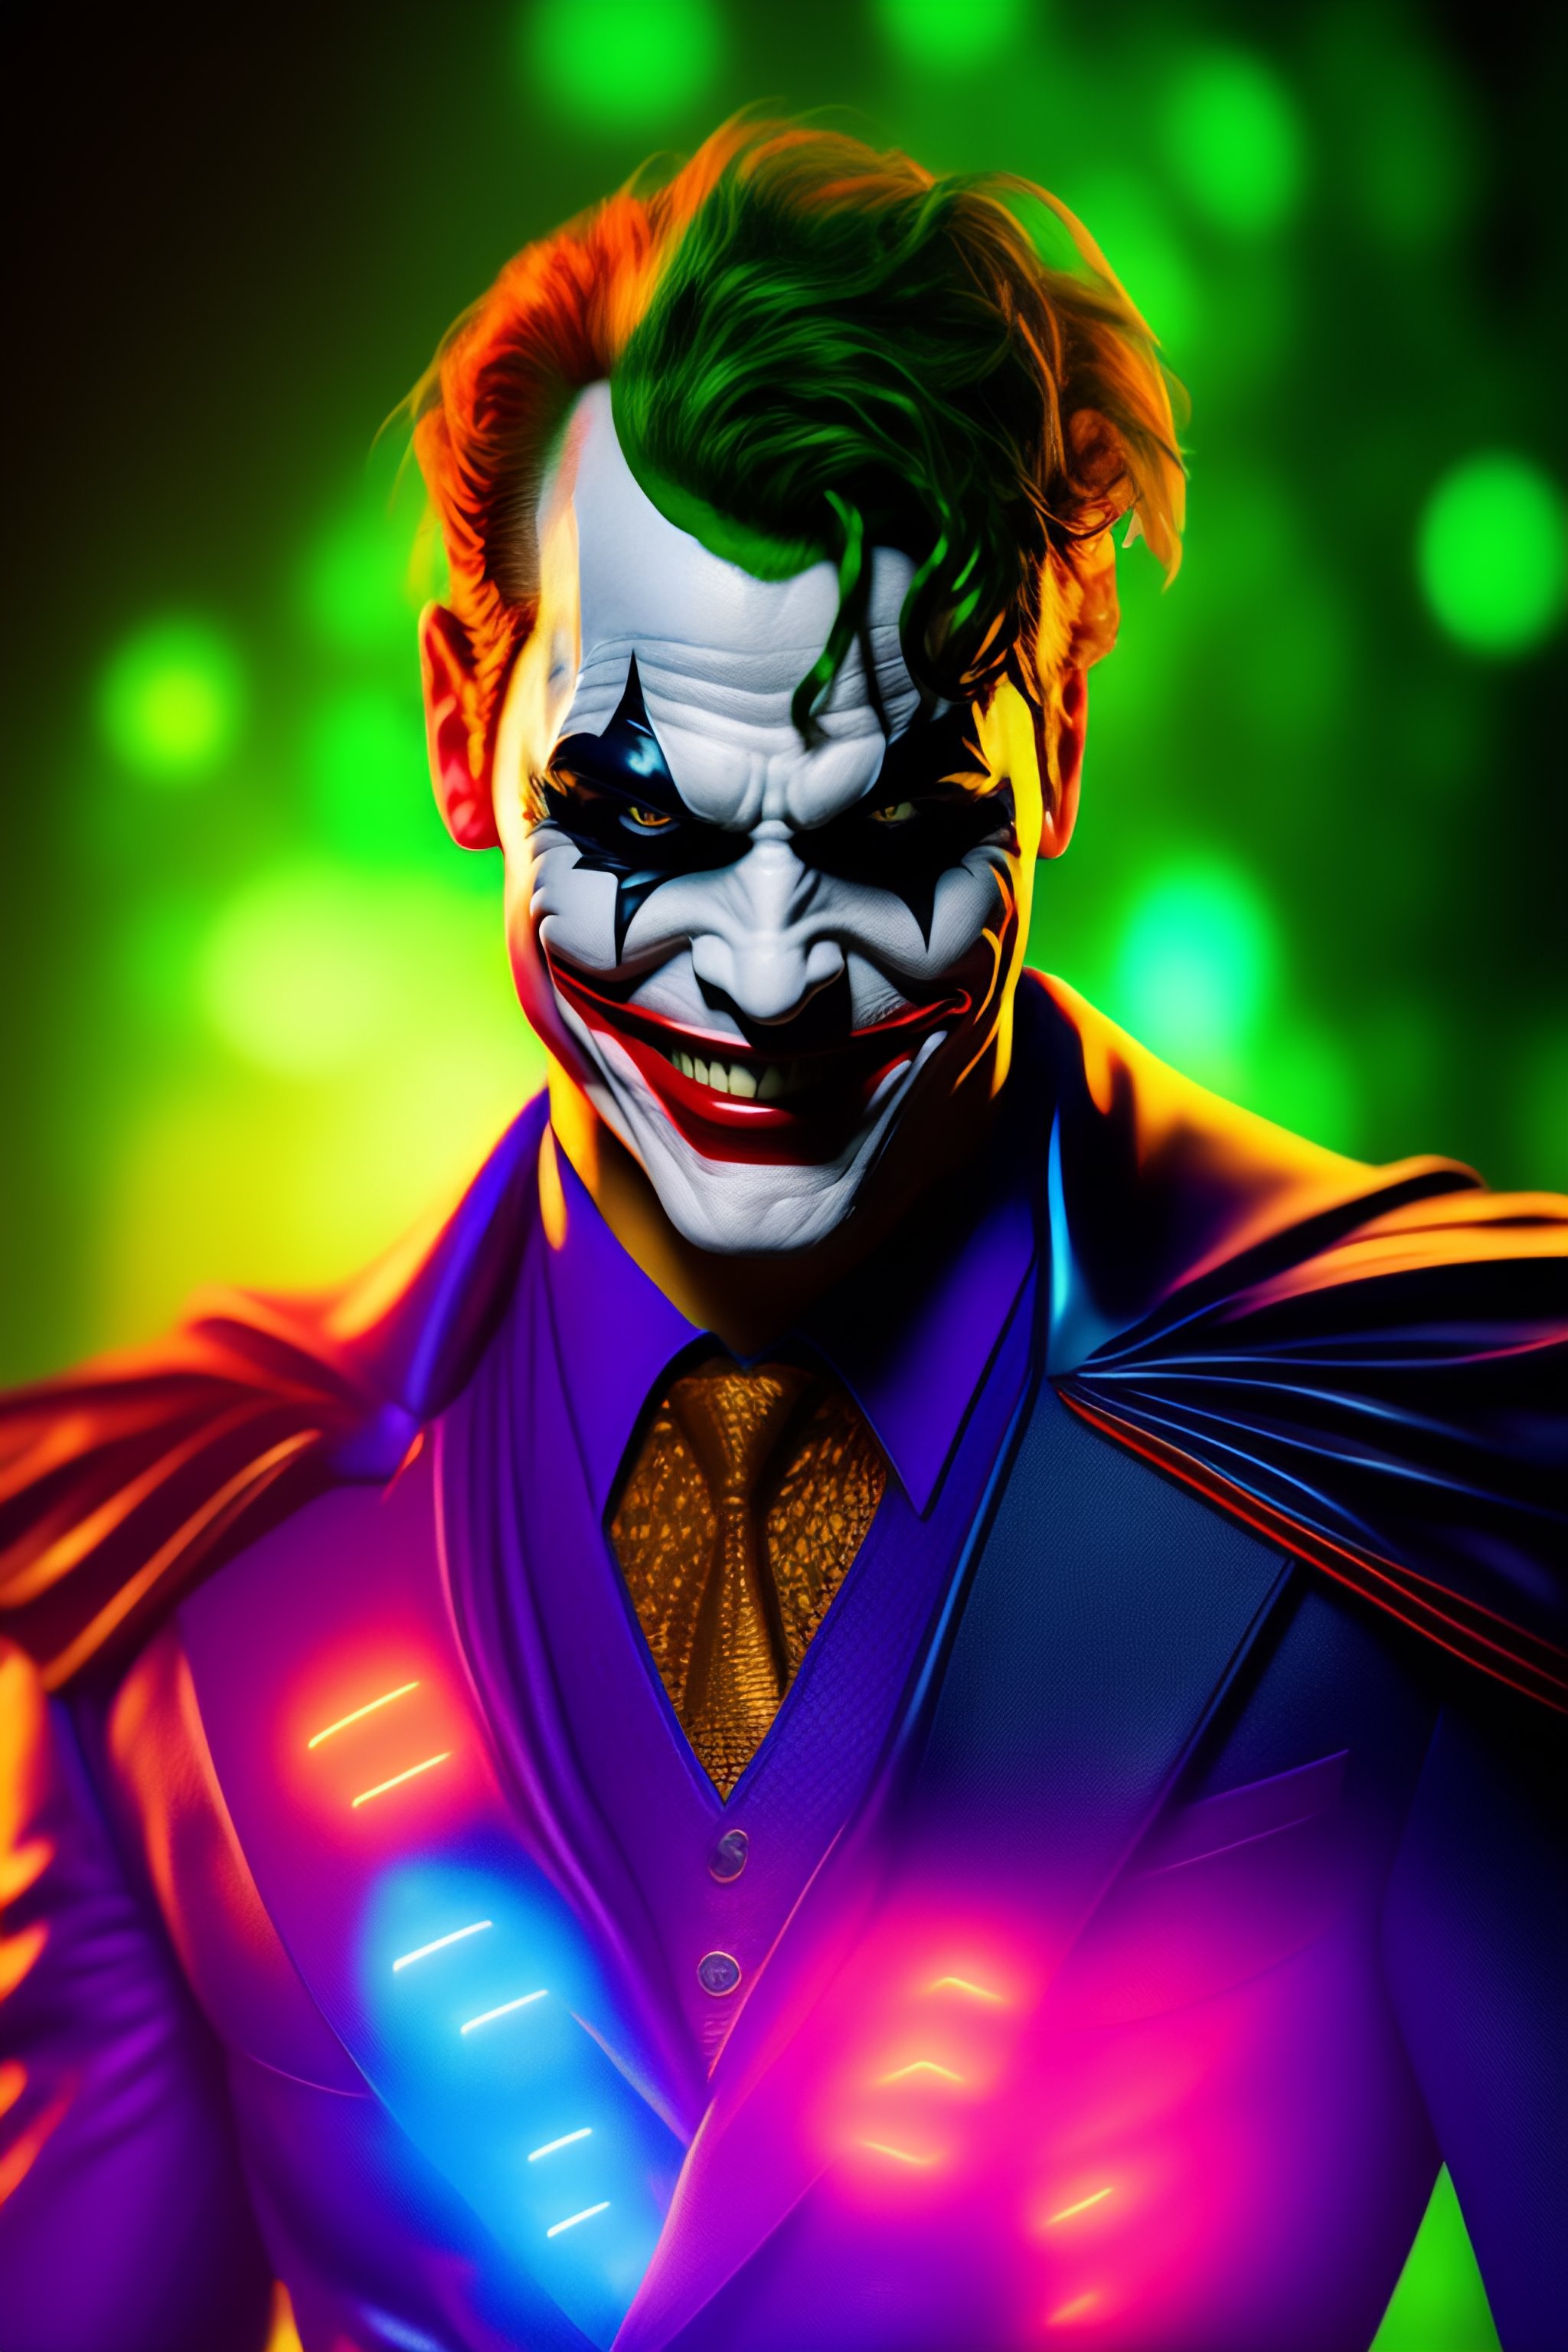 Lexica - The joker wearing the batman suit, vivd colors, glowing lights